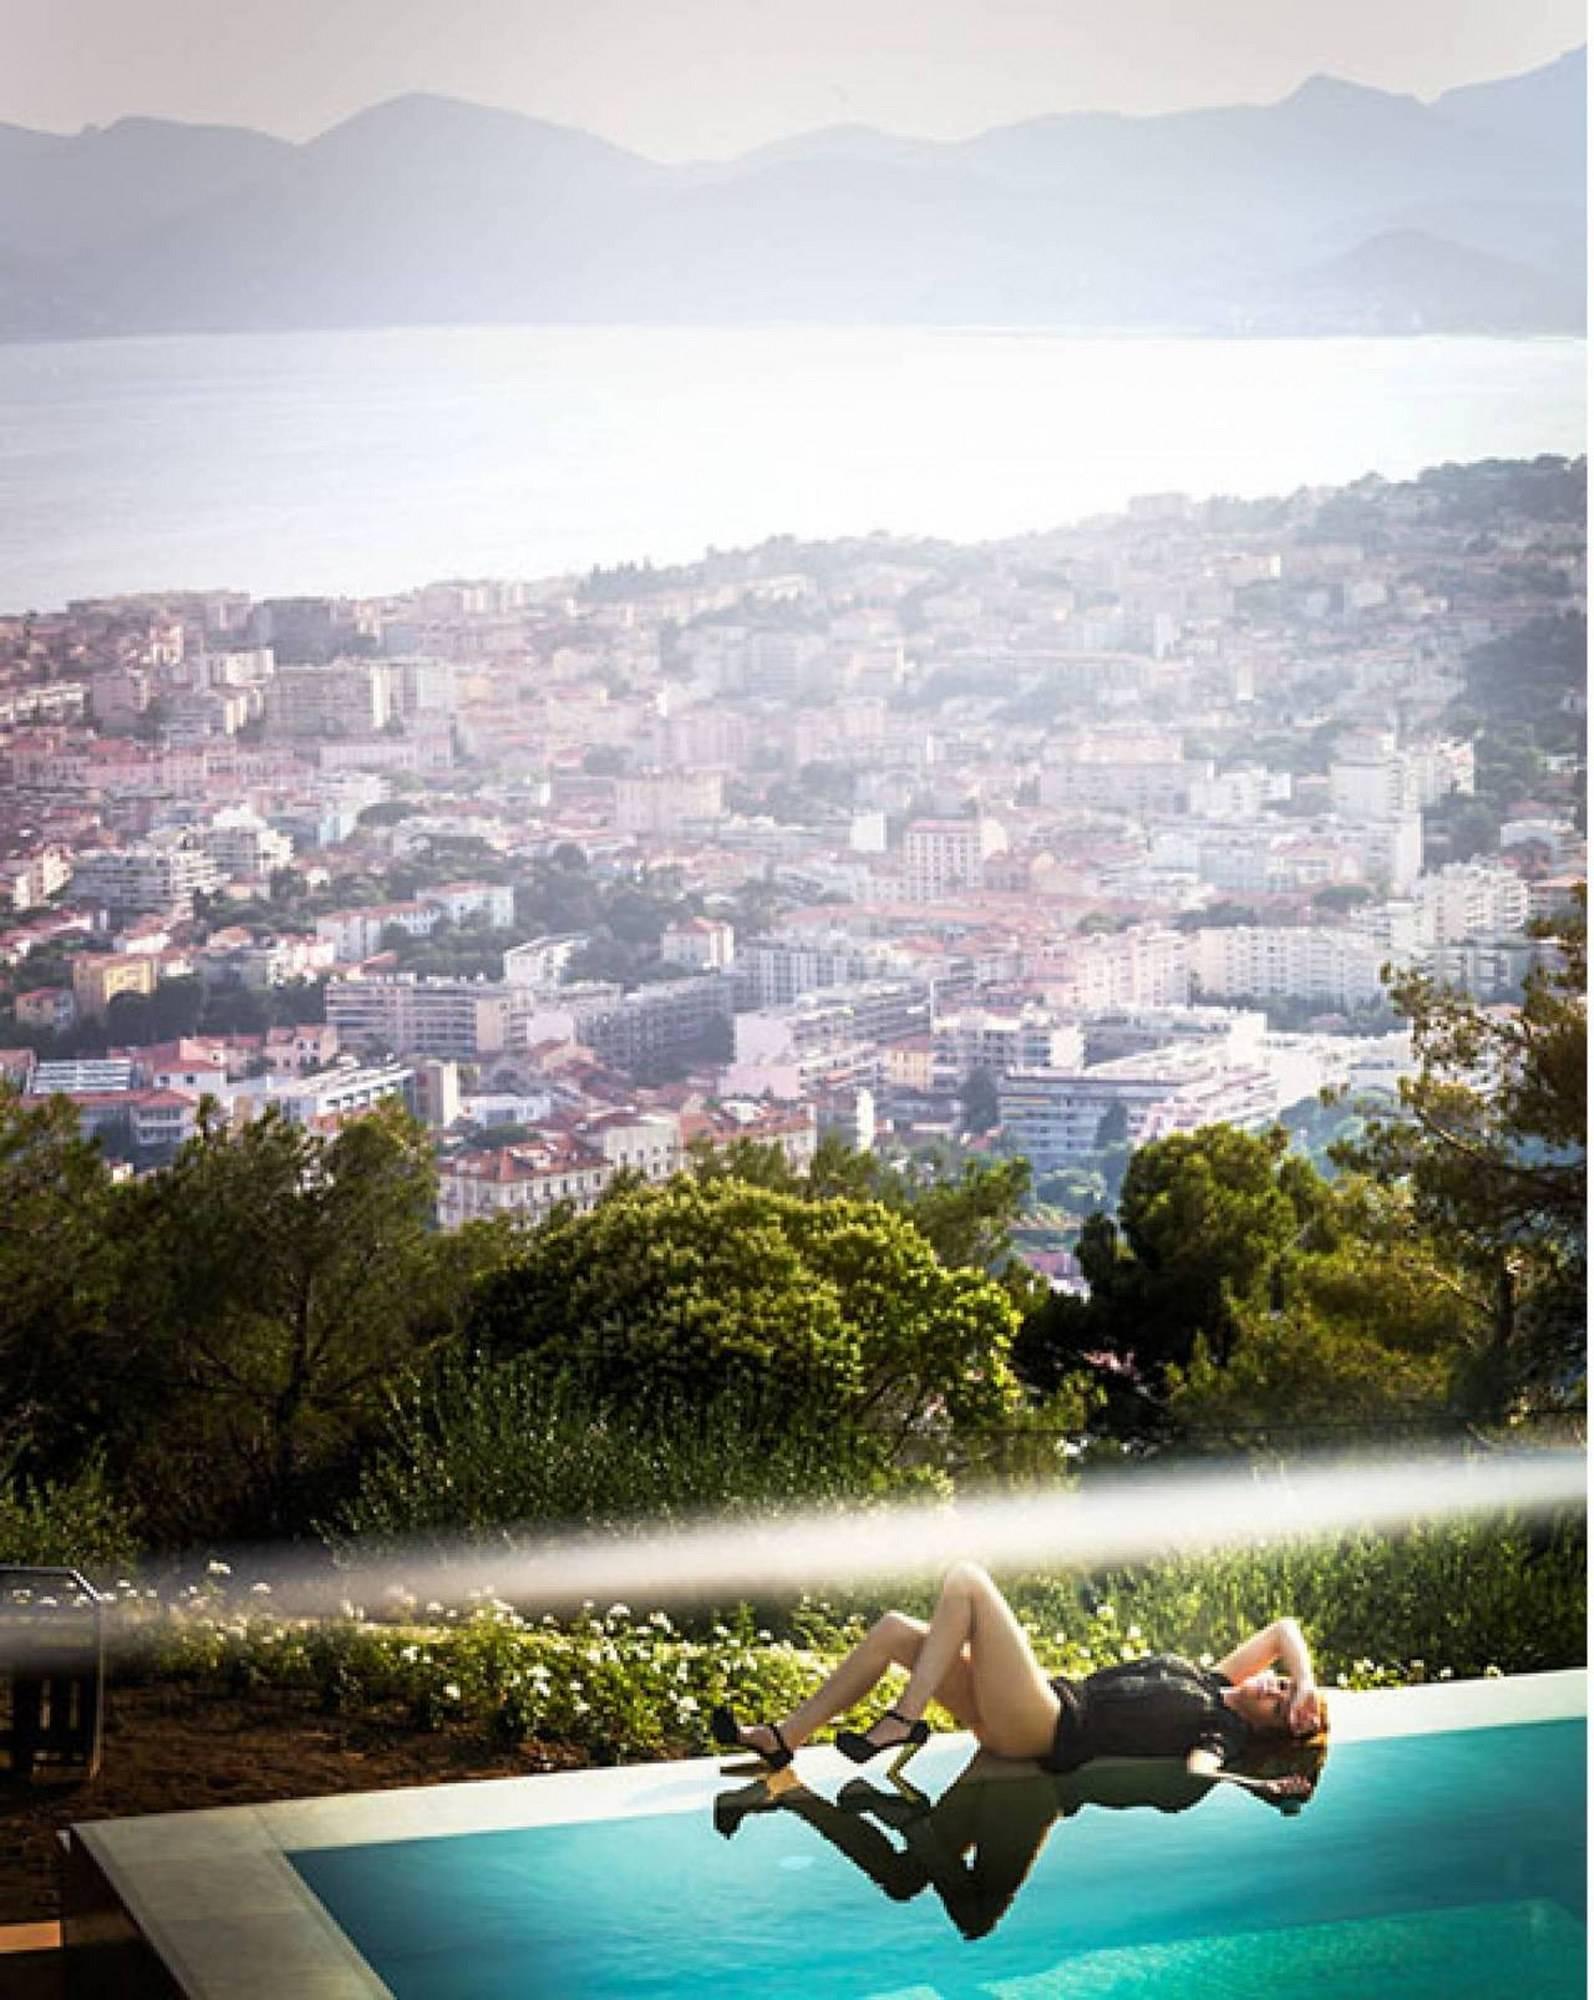 David Drebin Color Photograph - Dreams of Cannes (France)